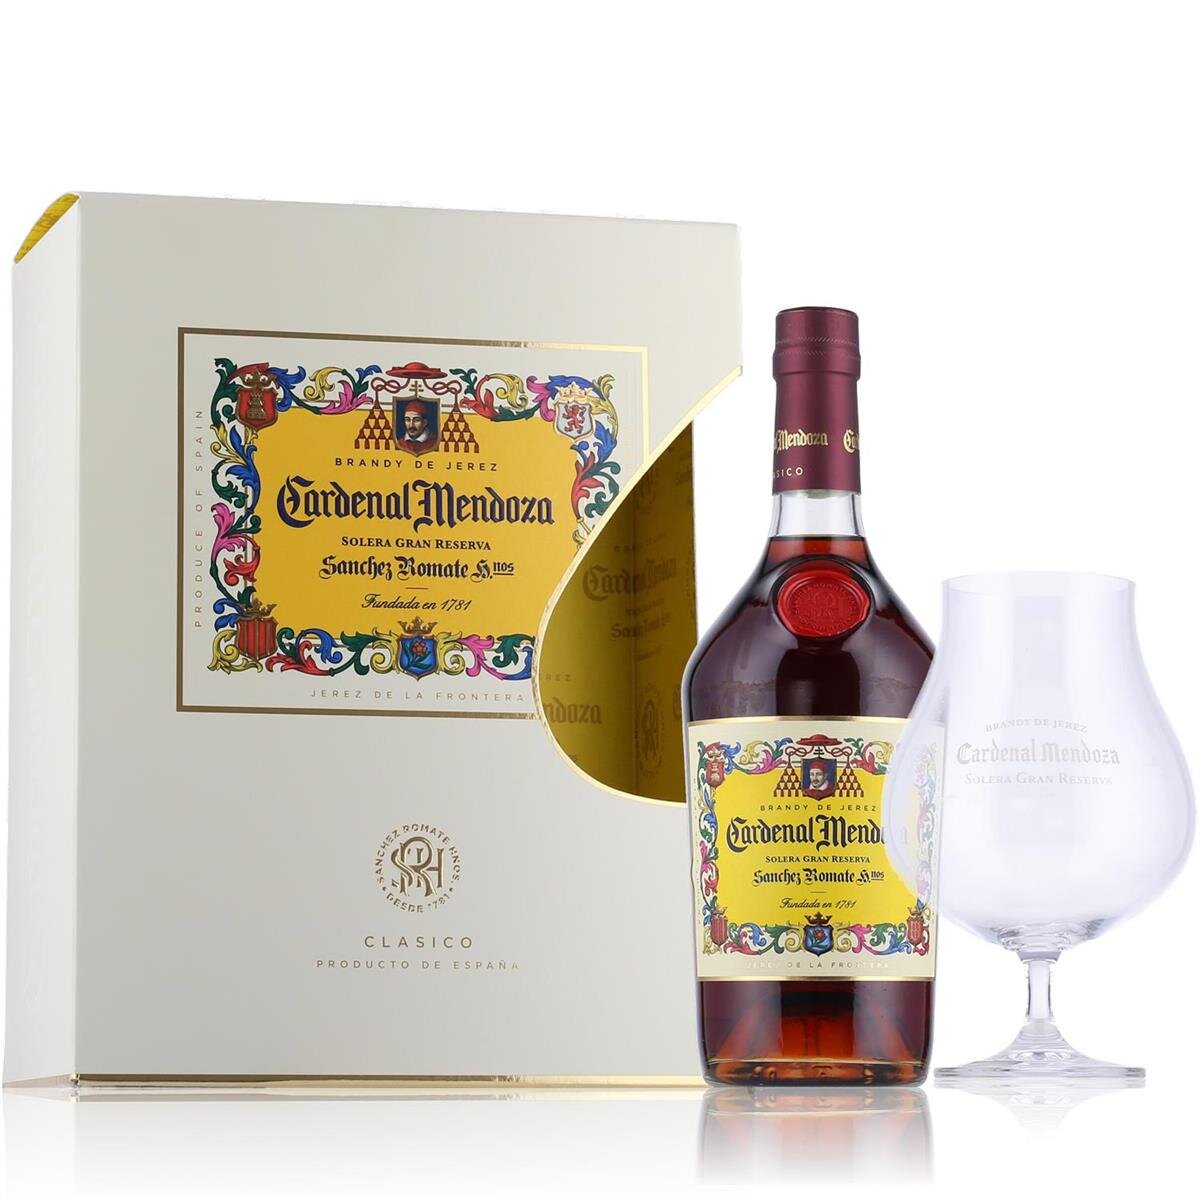 Cardenal Mendoza Solera Gran Reserva Brandy 40% Vol. 0,7l in Geschenk